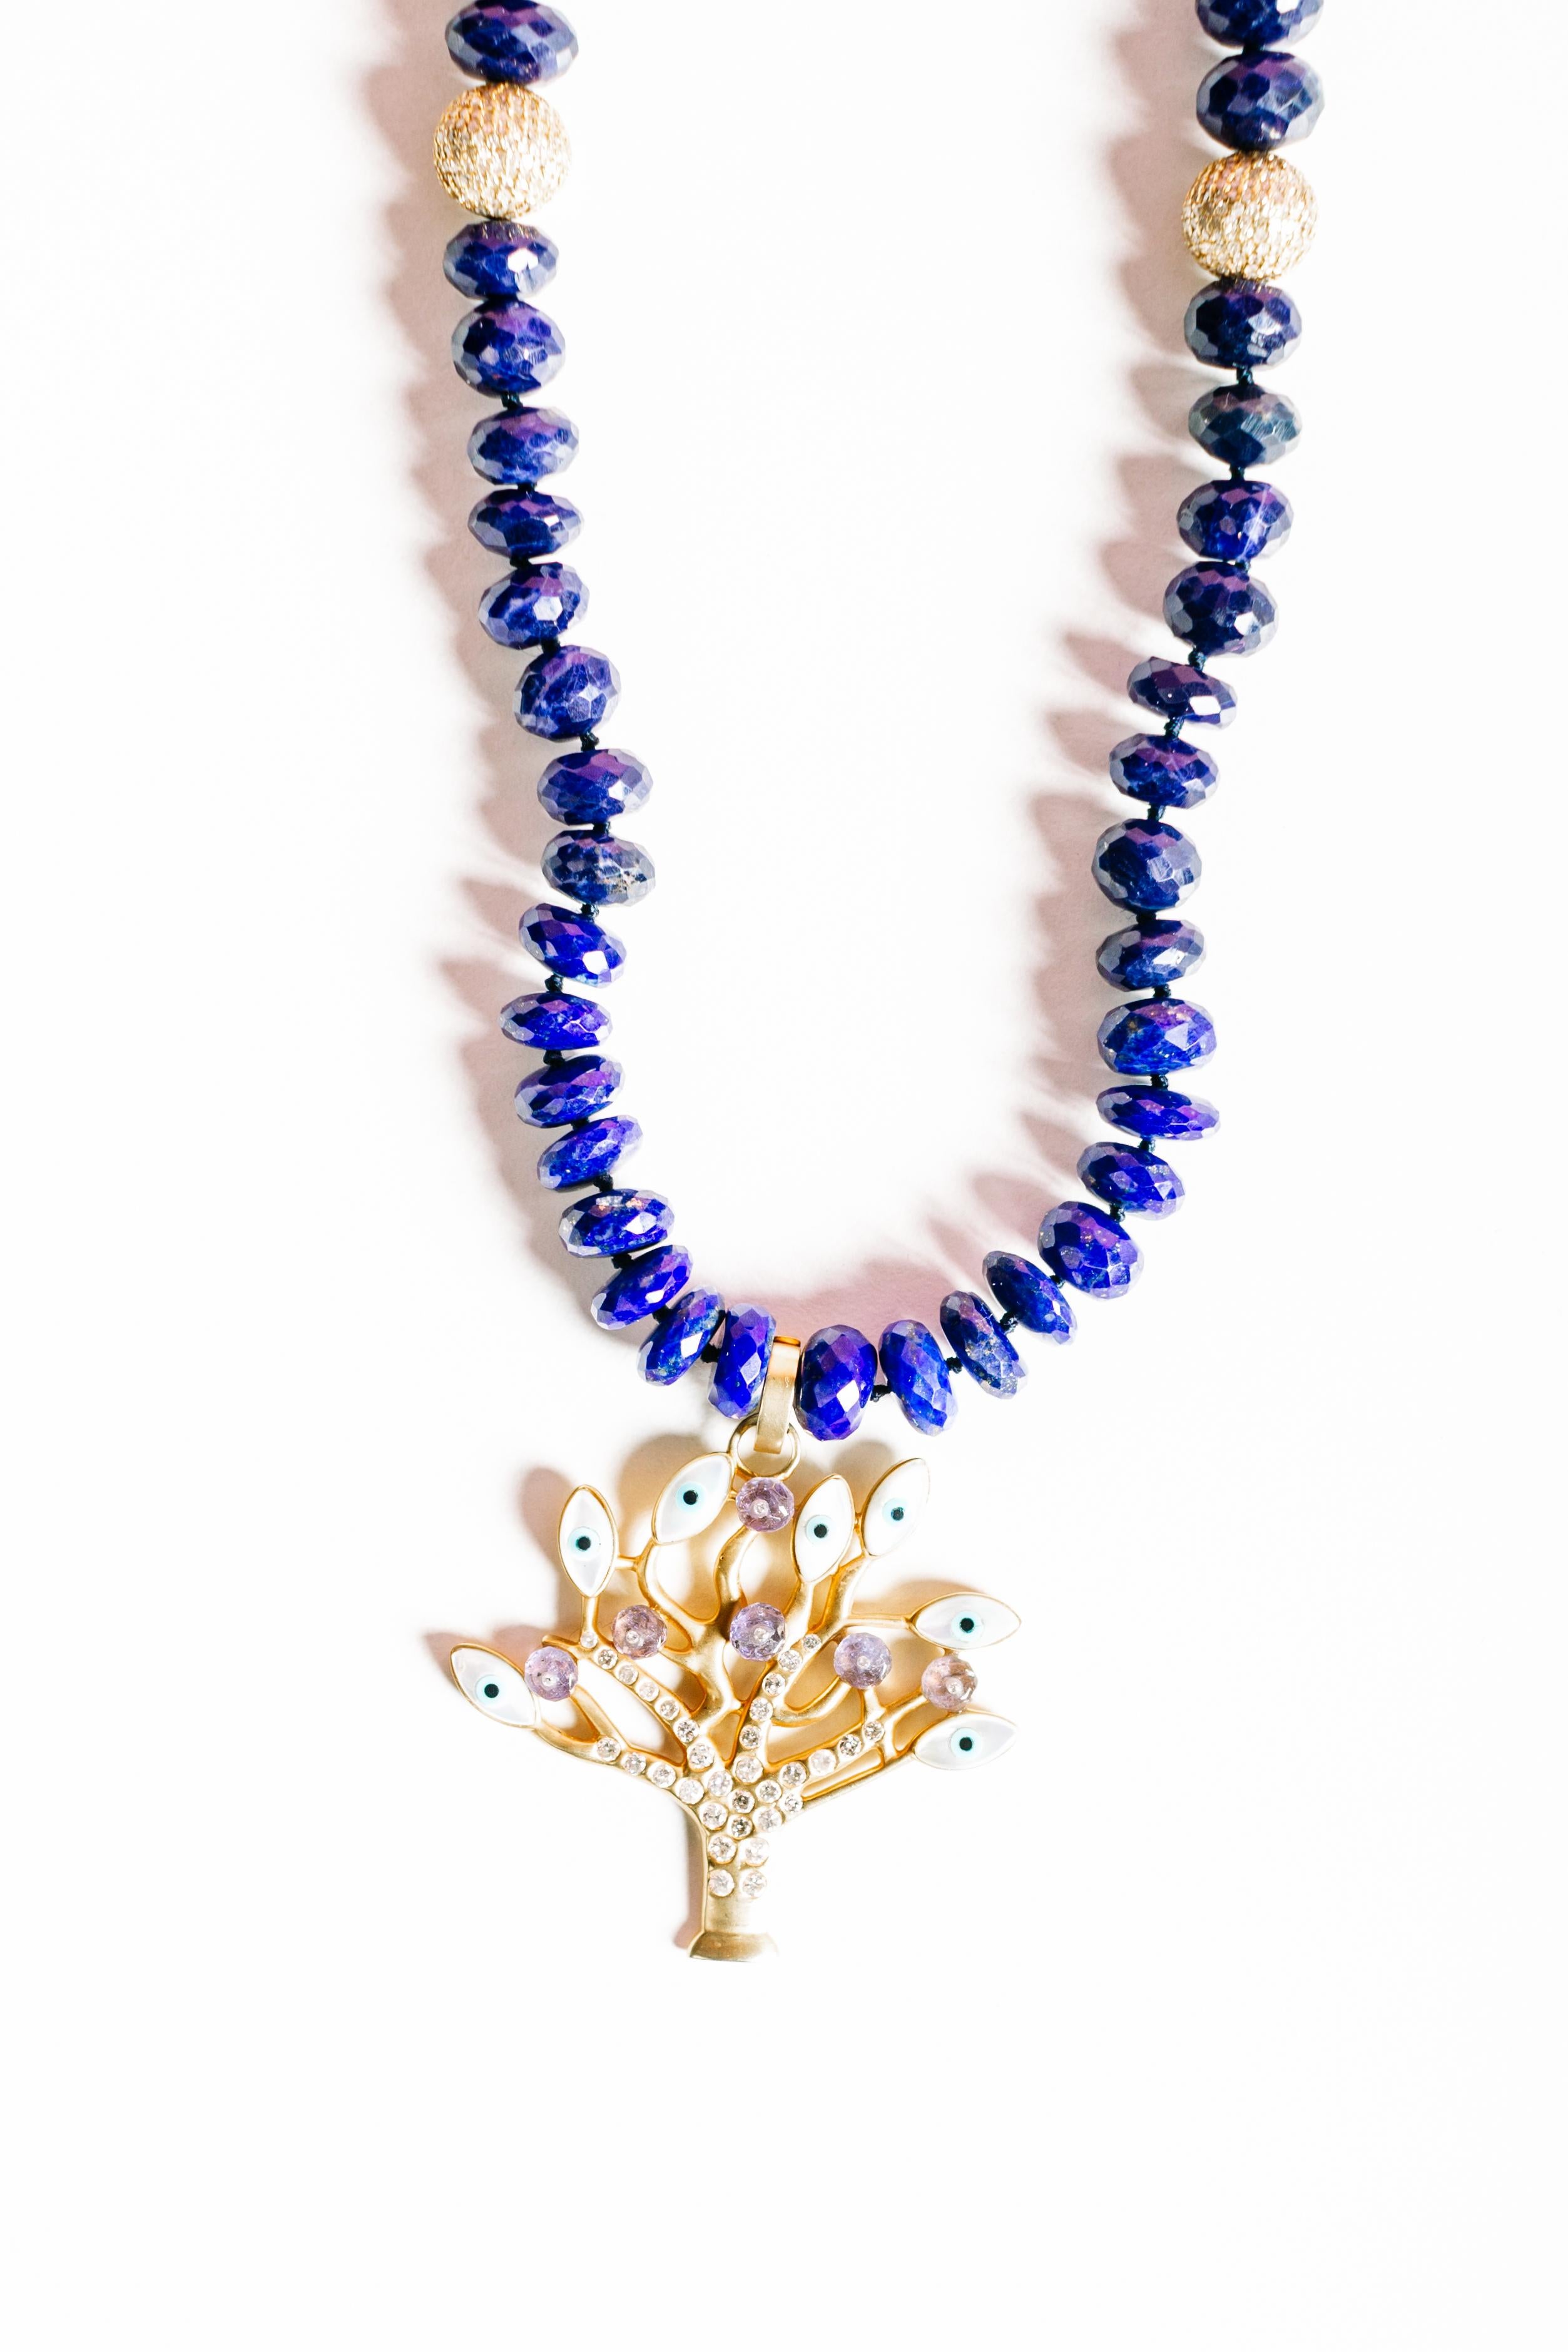 Brilliant Cut Clarissa Bronfman Lapis, 14k gold, Diamond, Enamel Tree of Life Beaded Necklace